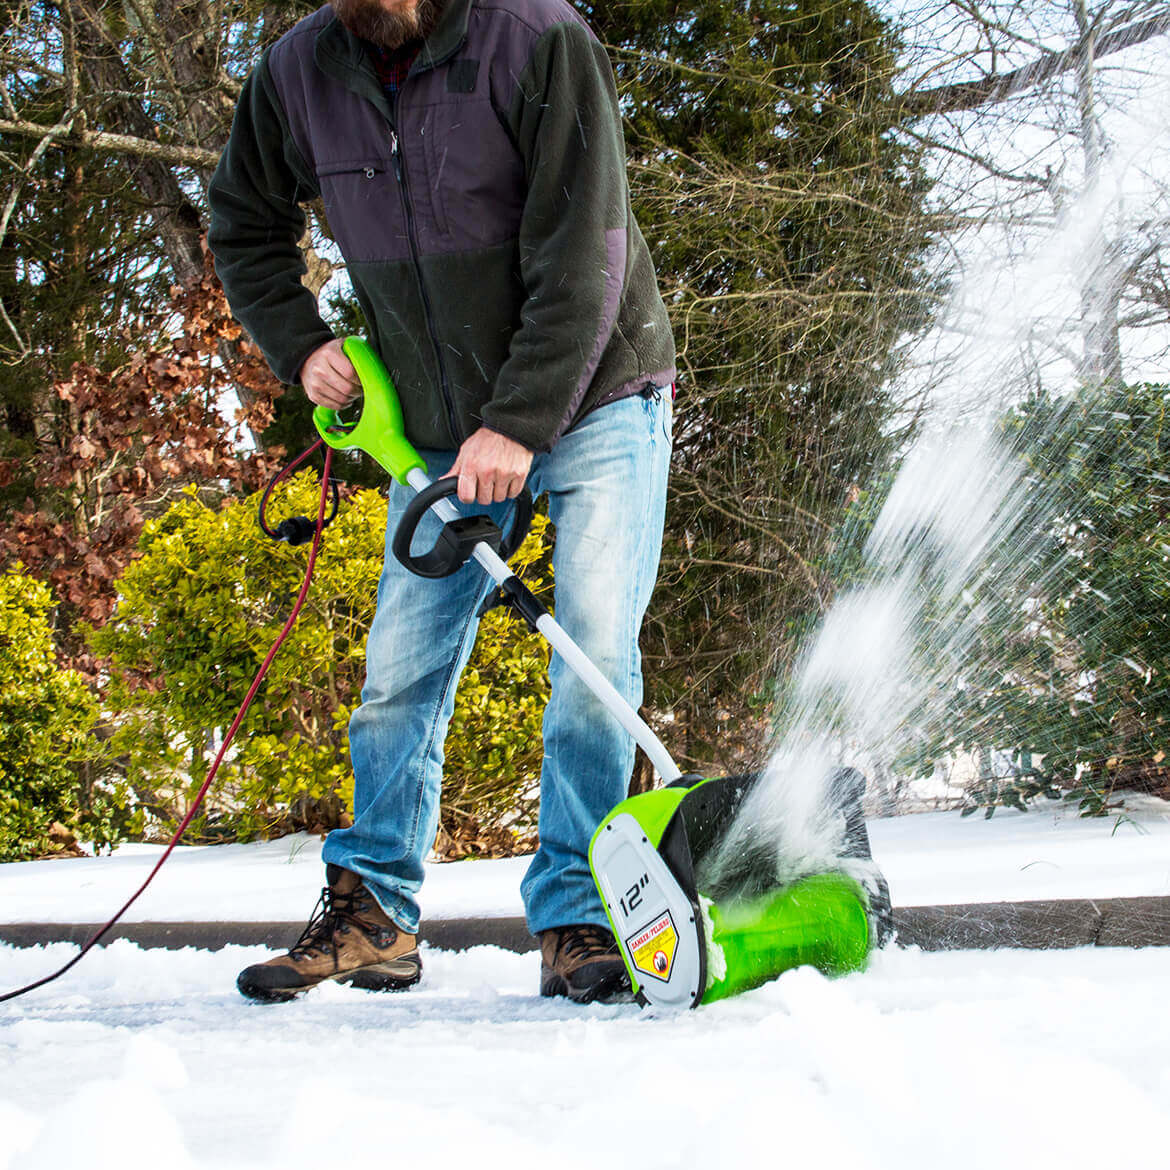 8 Amp 12 Corded Snow Shovel – Greenworks Tools Canada Inc.